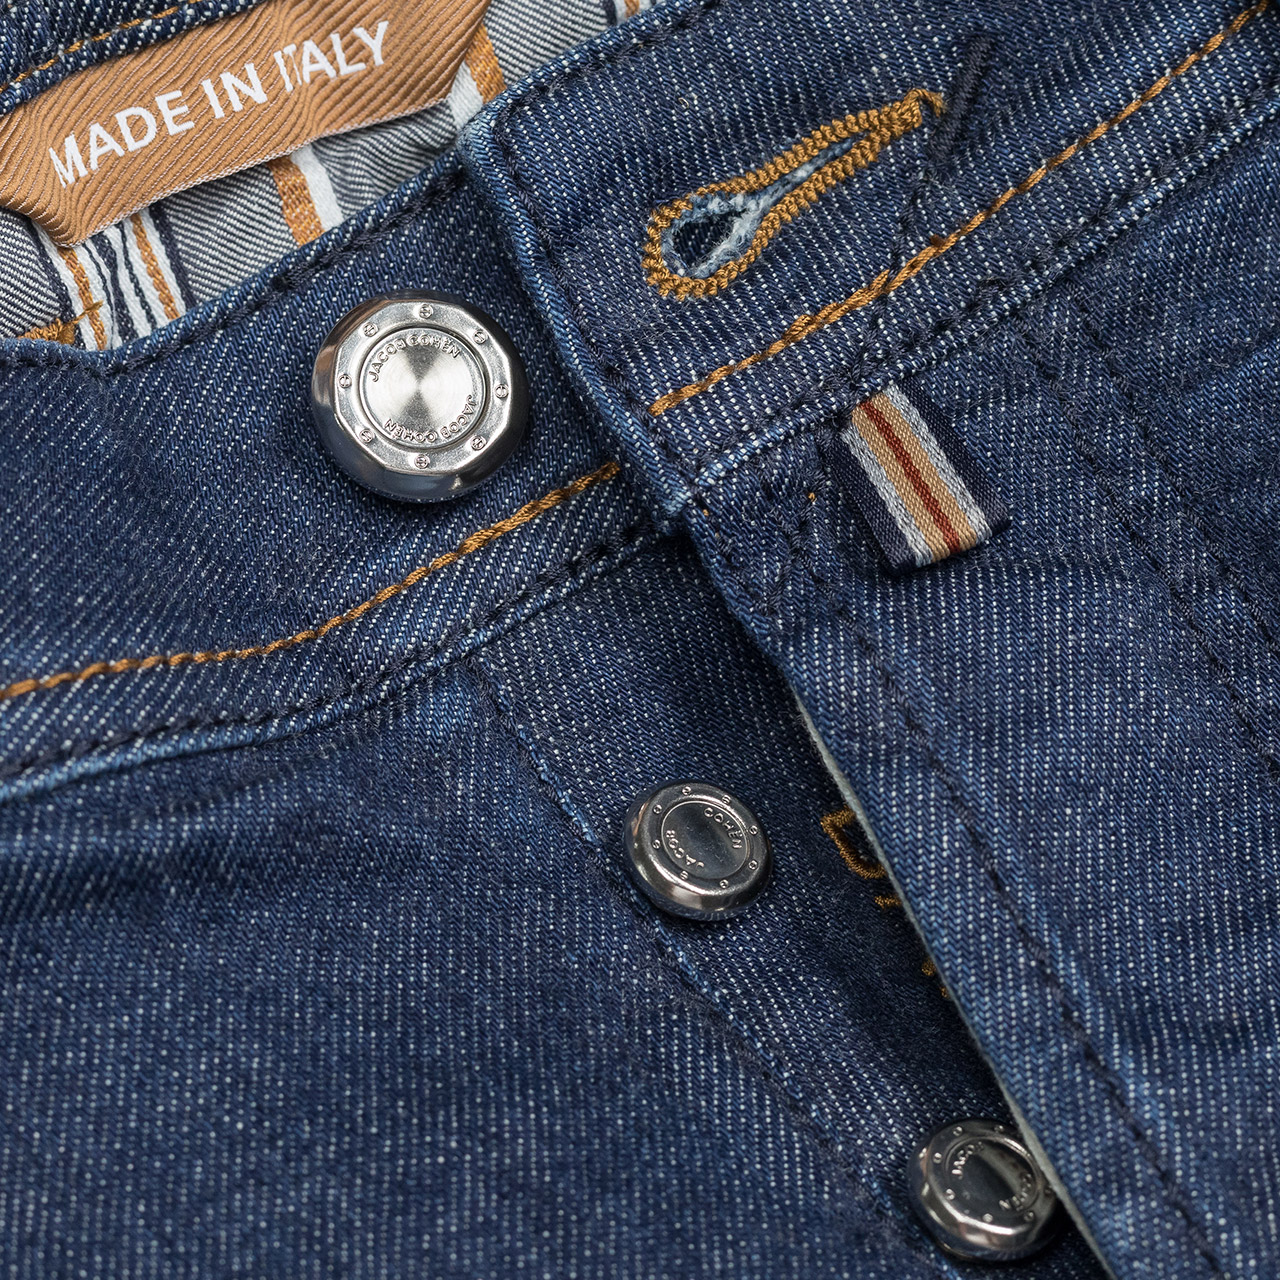 Jacob Cohen Jeans BARD "Limited Edition Denim" in dunkelblau